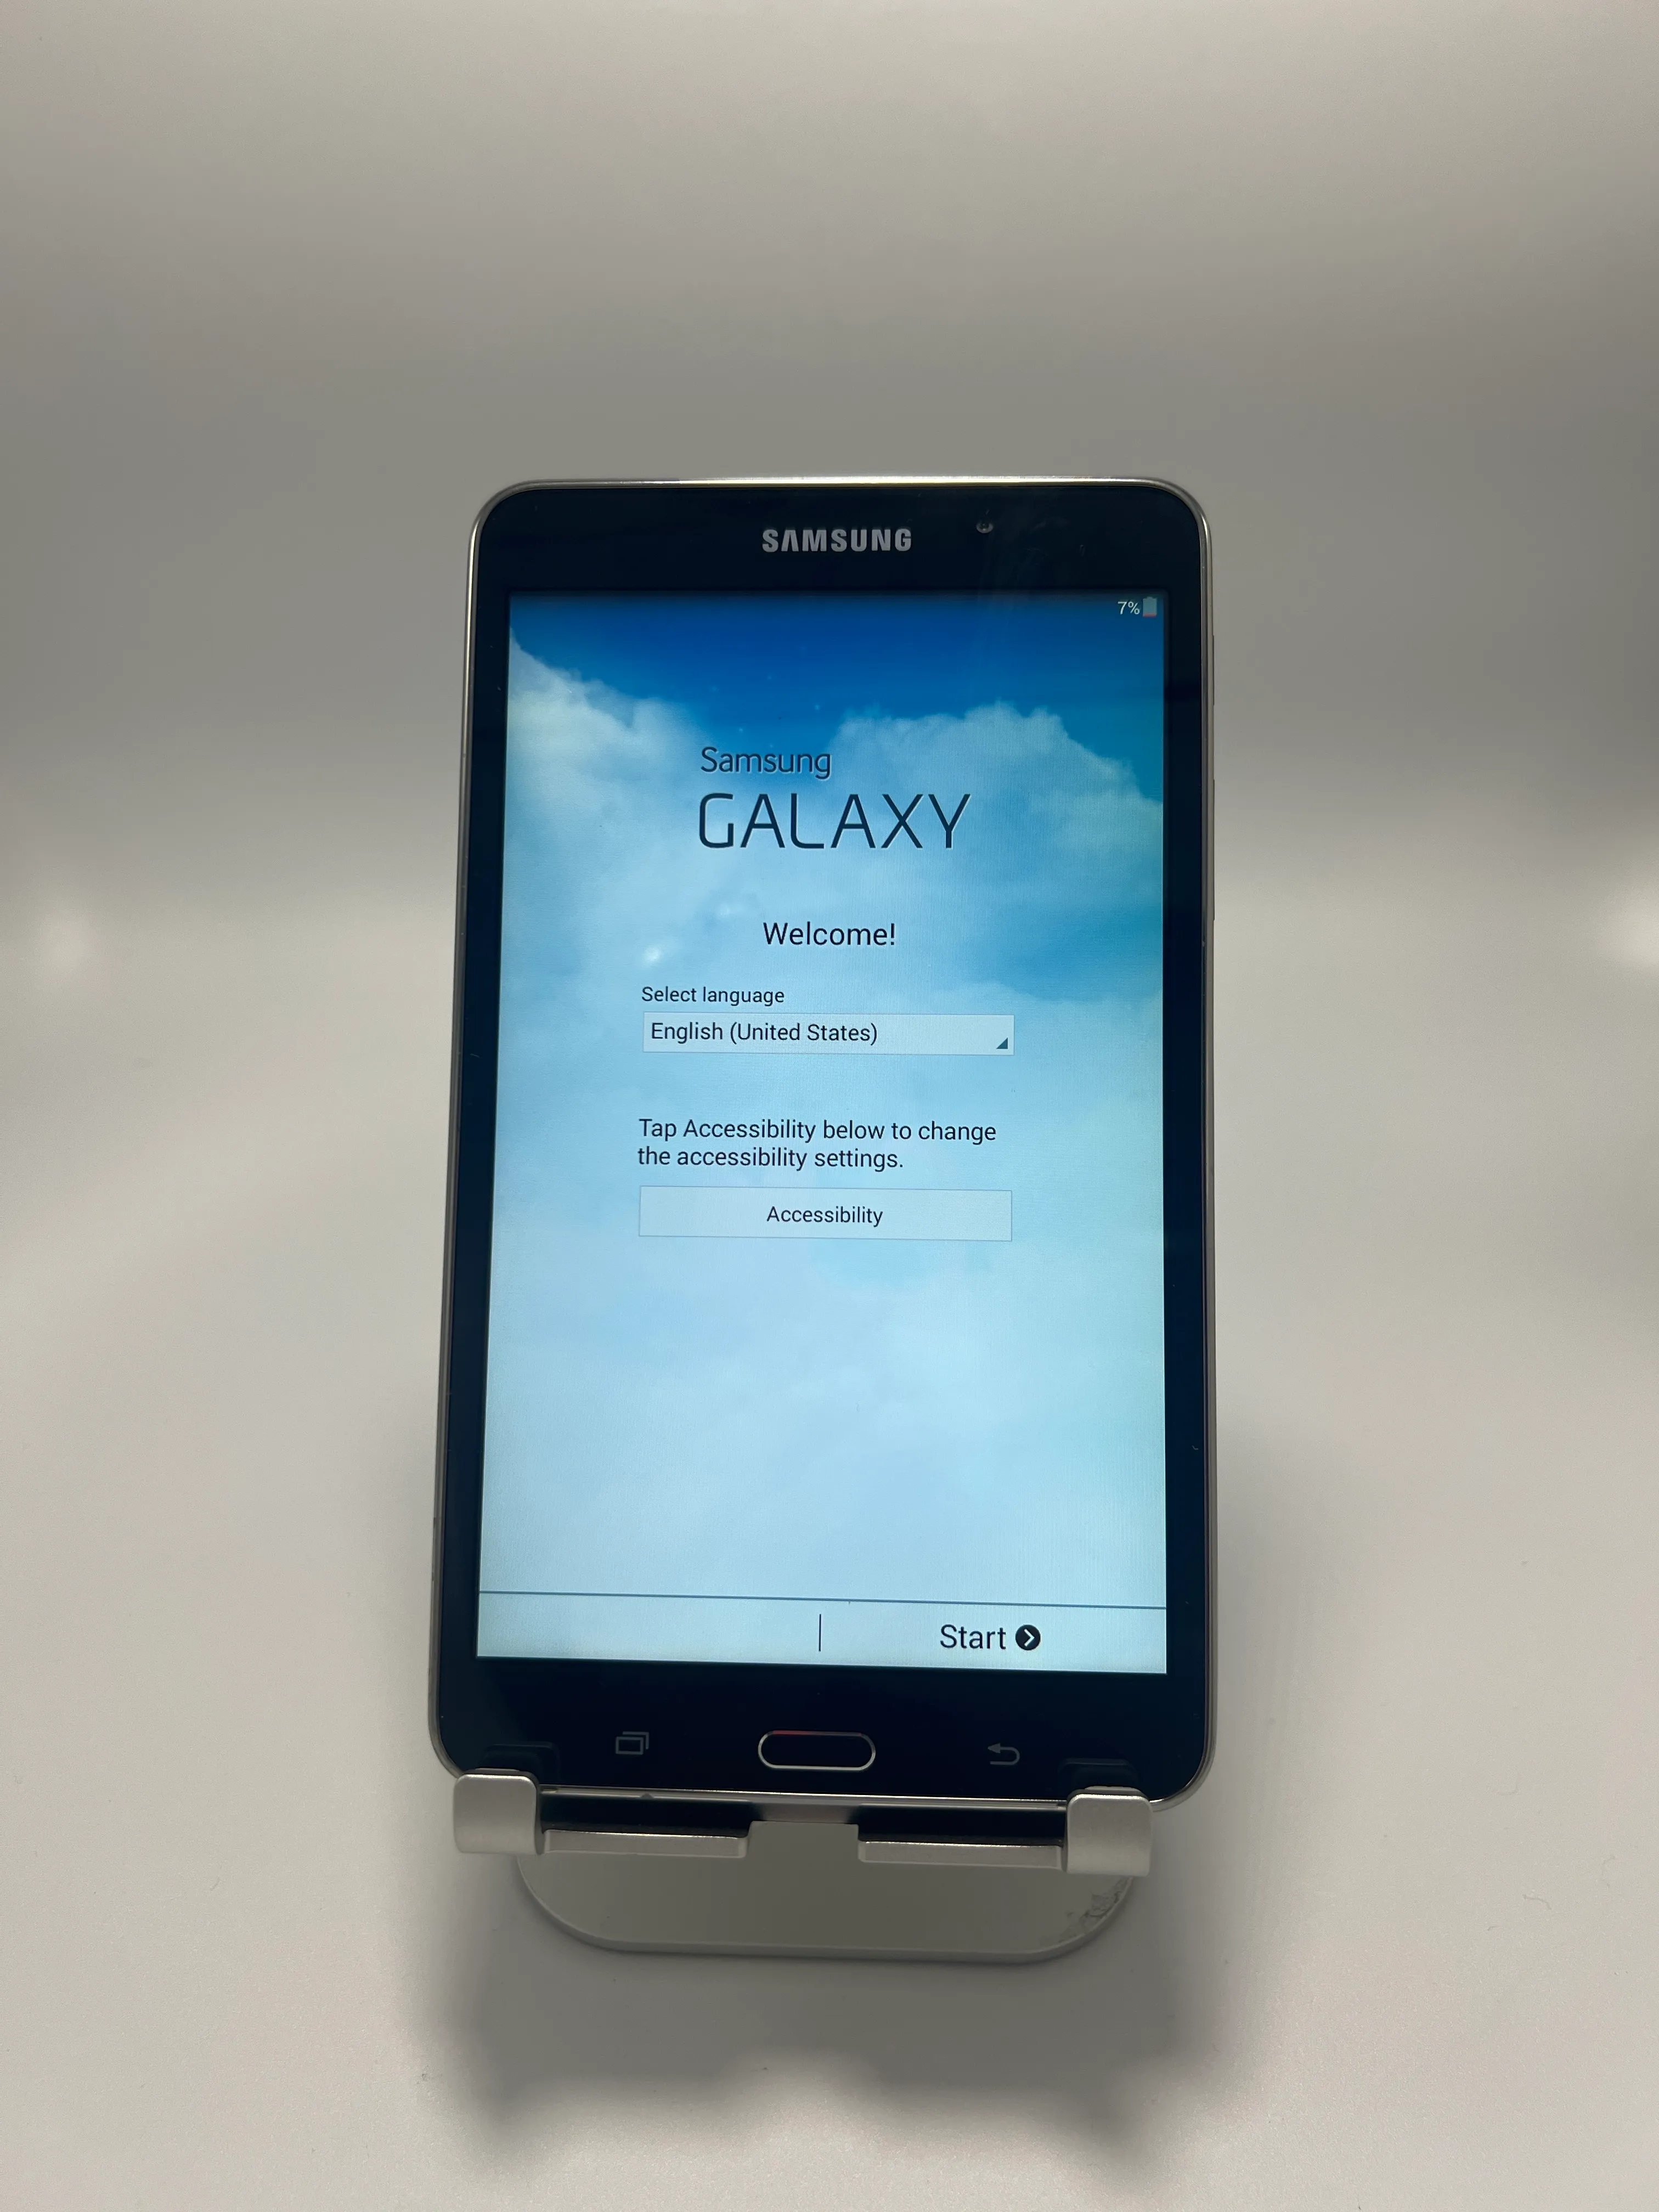 Samsung Galaxy Tab 4 7.0 media